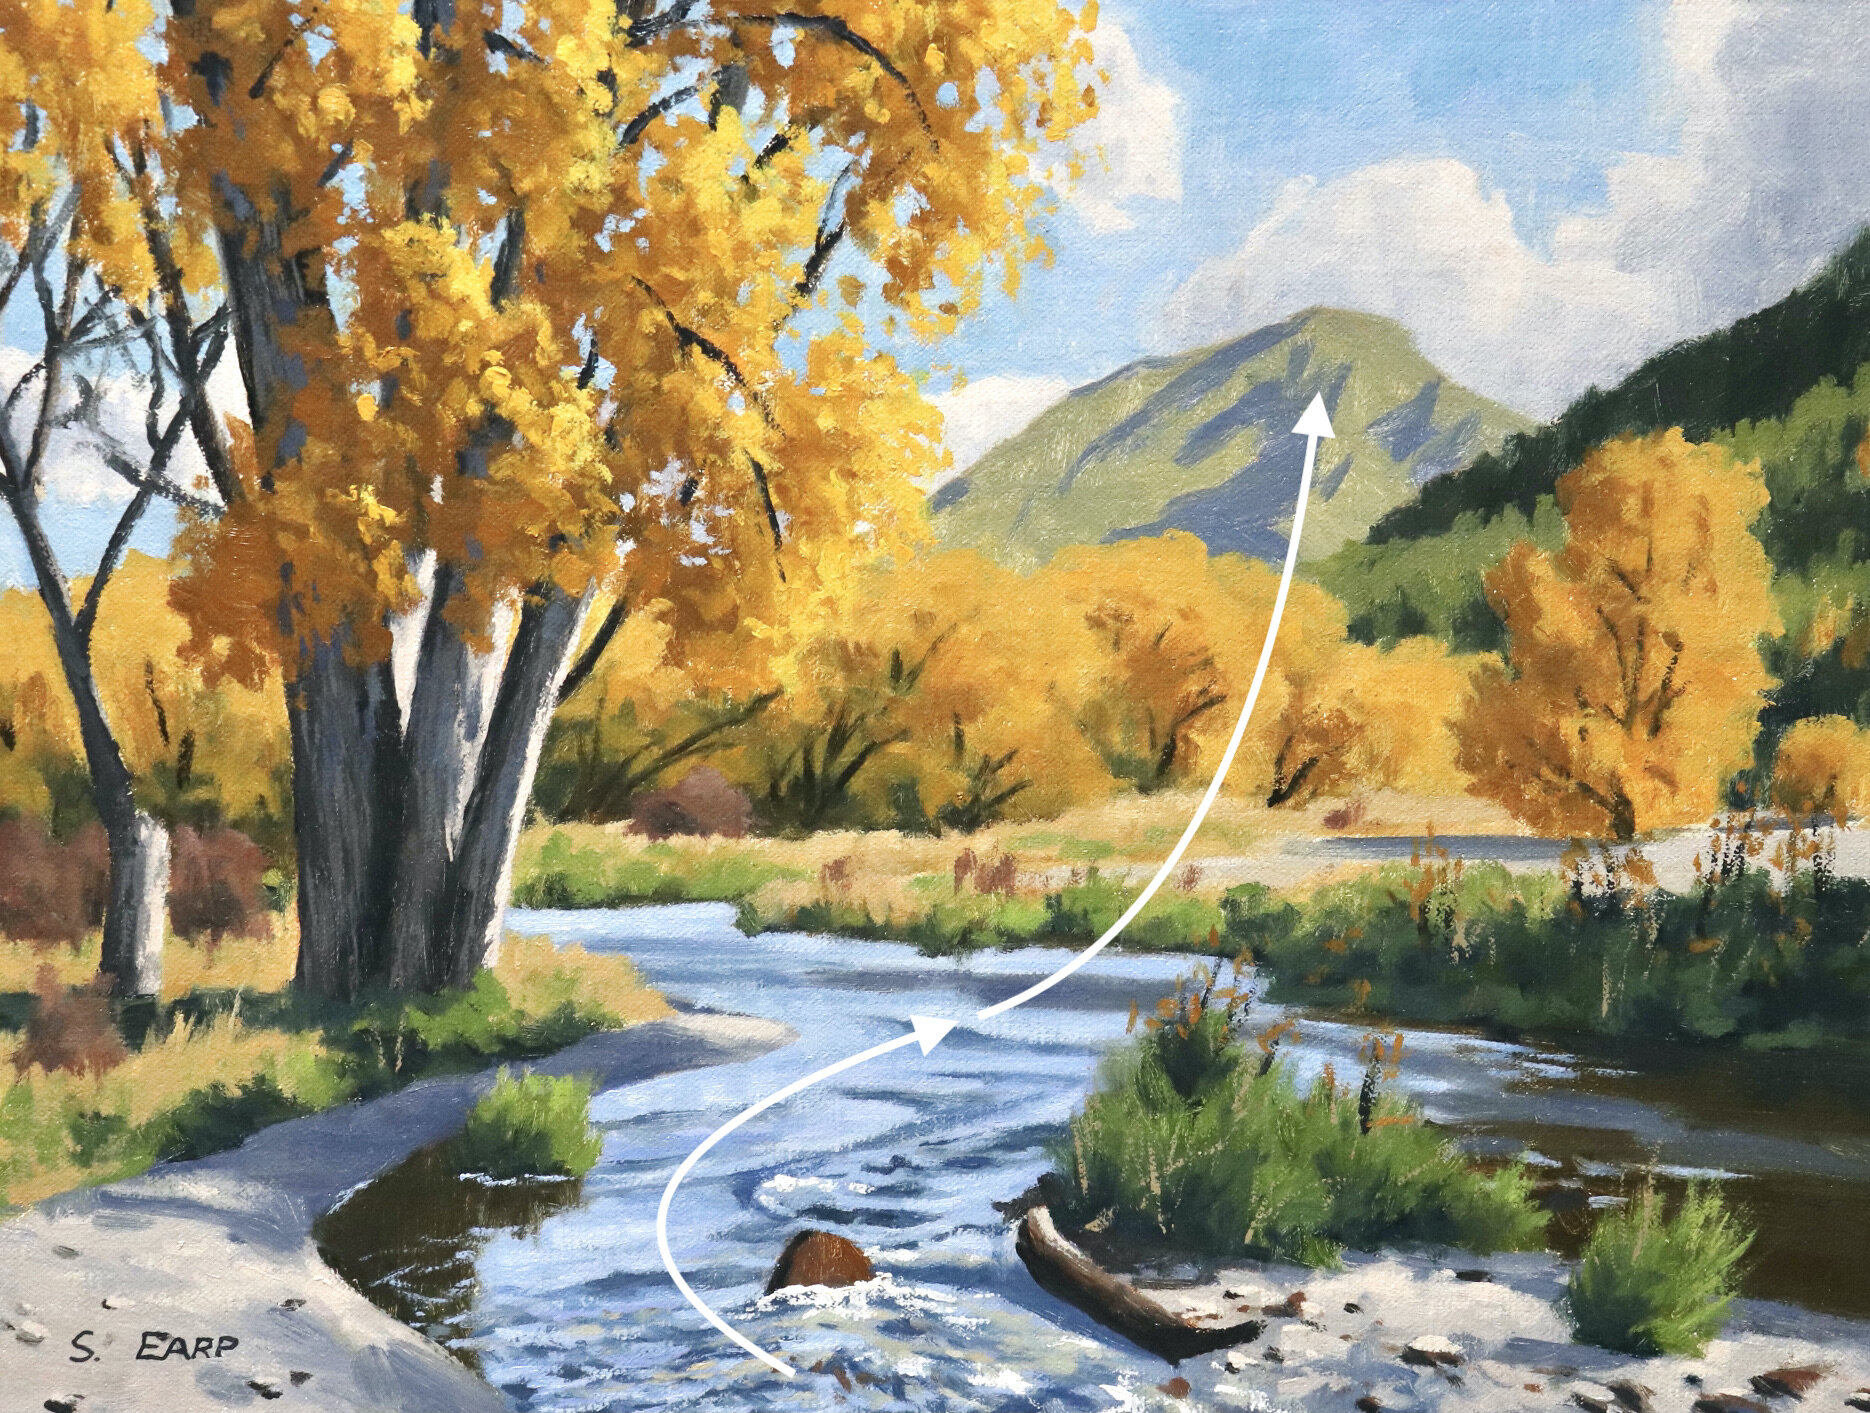 Autumn Poplars and Willows - Arrowtown - Samuel Earp - Oil Painting copy 2.JPG